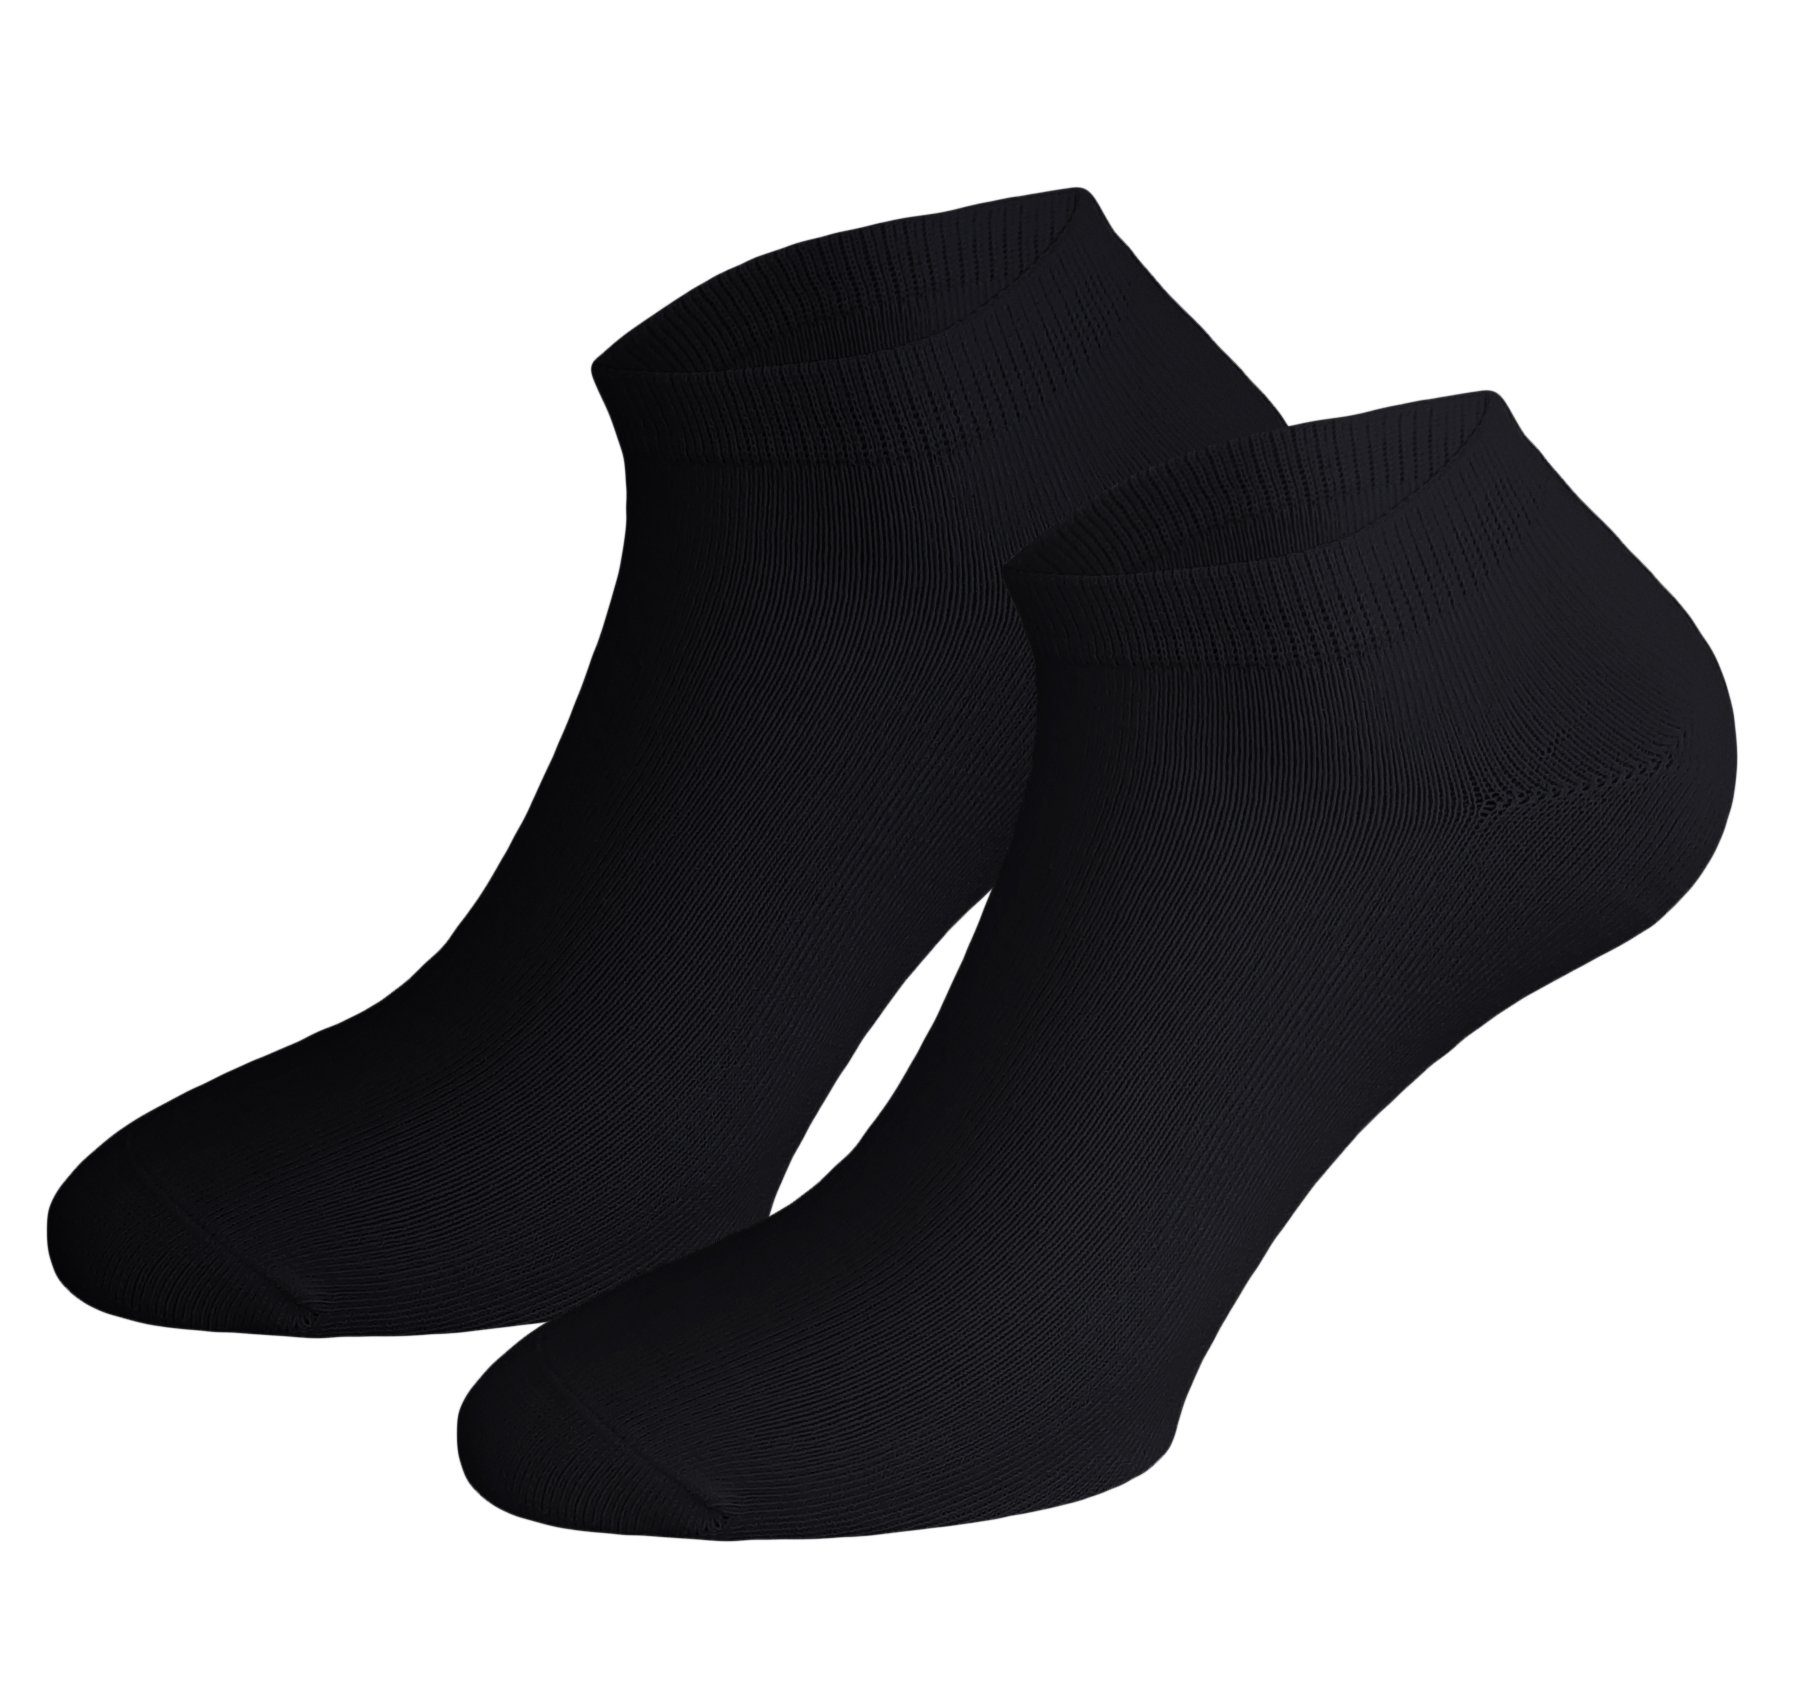 Sockenhimmel Sneakersocken Socken für Damen leichte Sommersocken kurze Sportsocken in Basic Farben (10 Paar) maschinengekettelte Naht (sehr flach) Schwarz